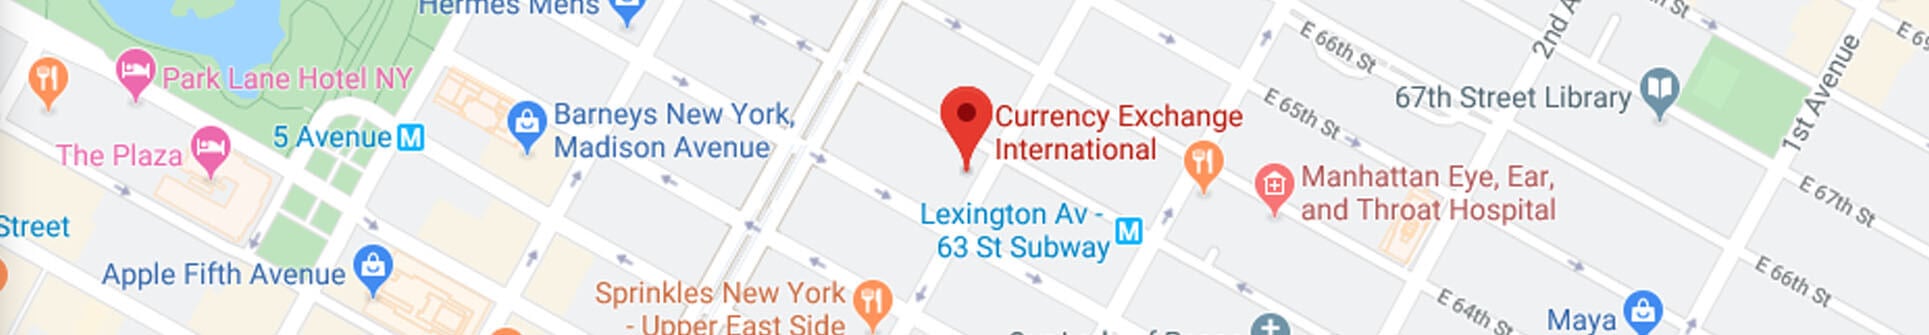 CXI Westfield Garden State Plaza – Currency Exchange in Paramus, NJ -  Currency Exchange International, Corp.